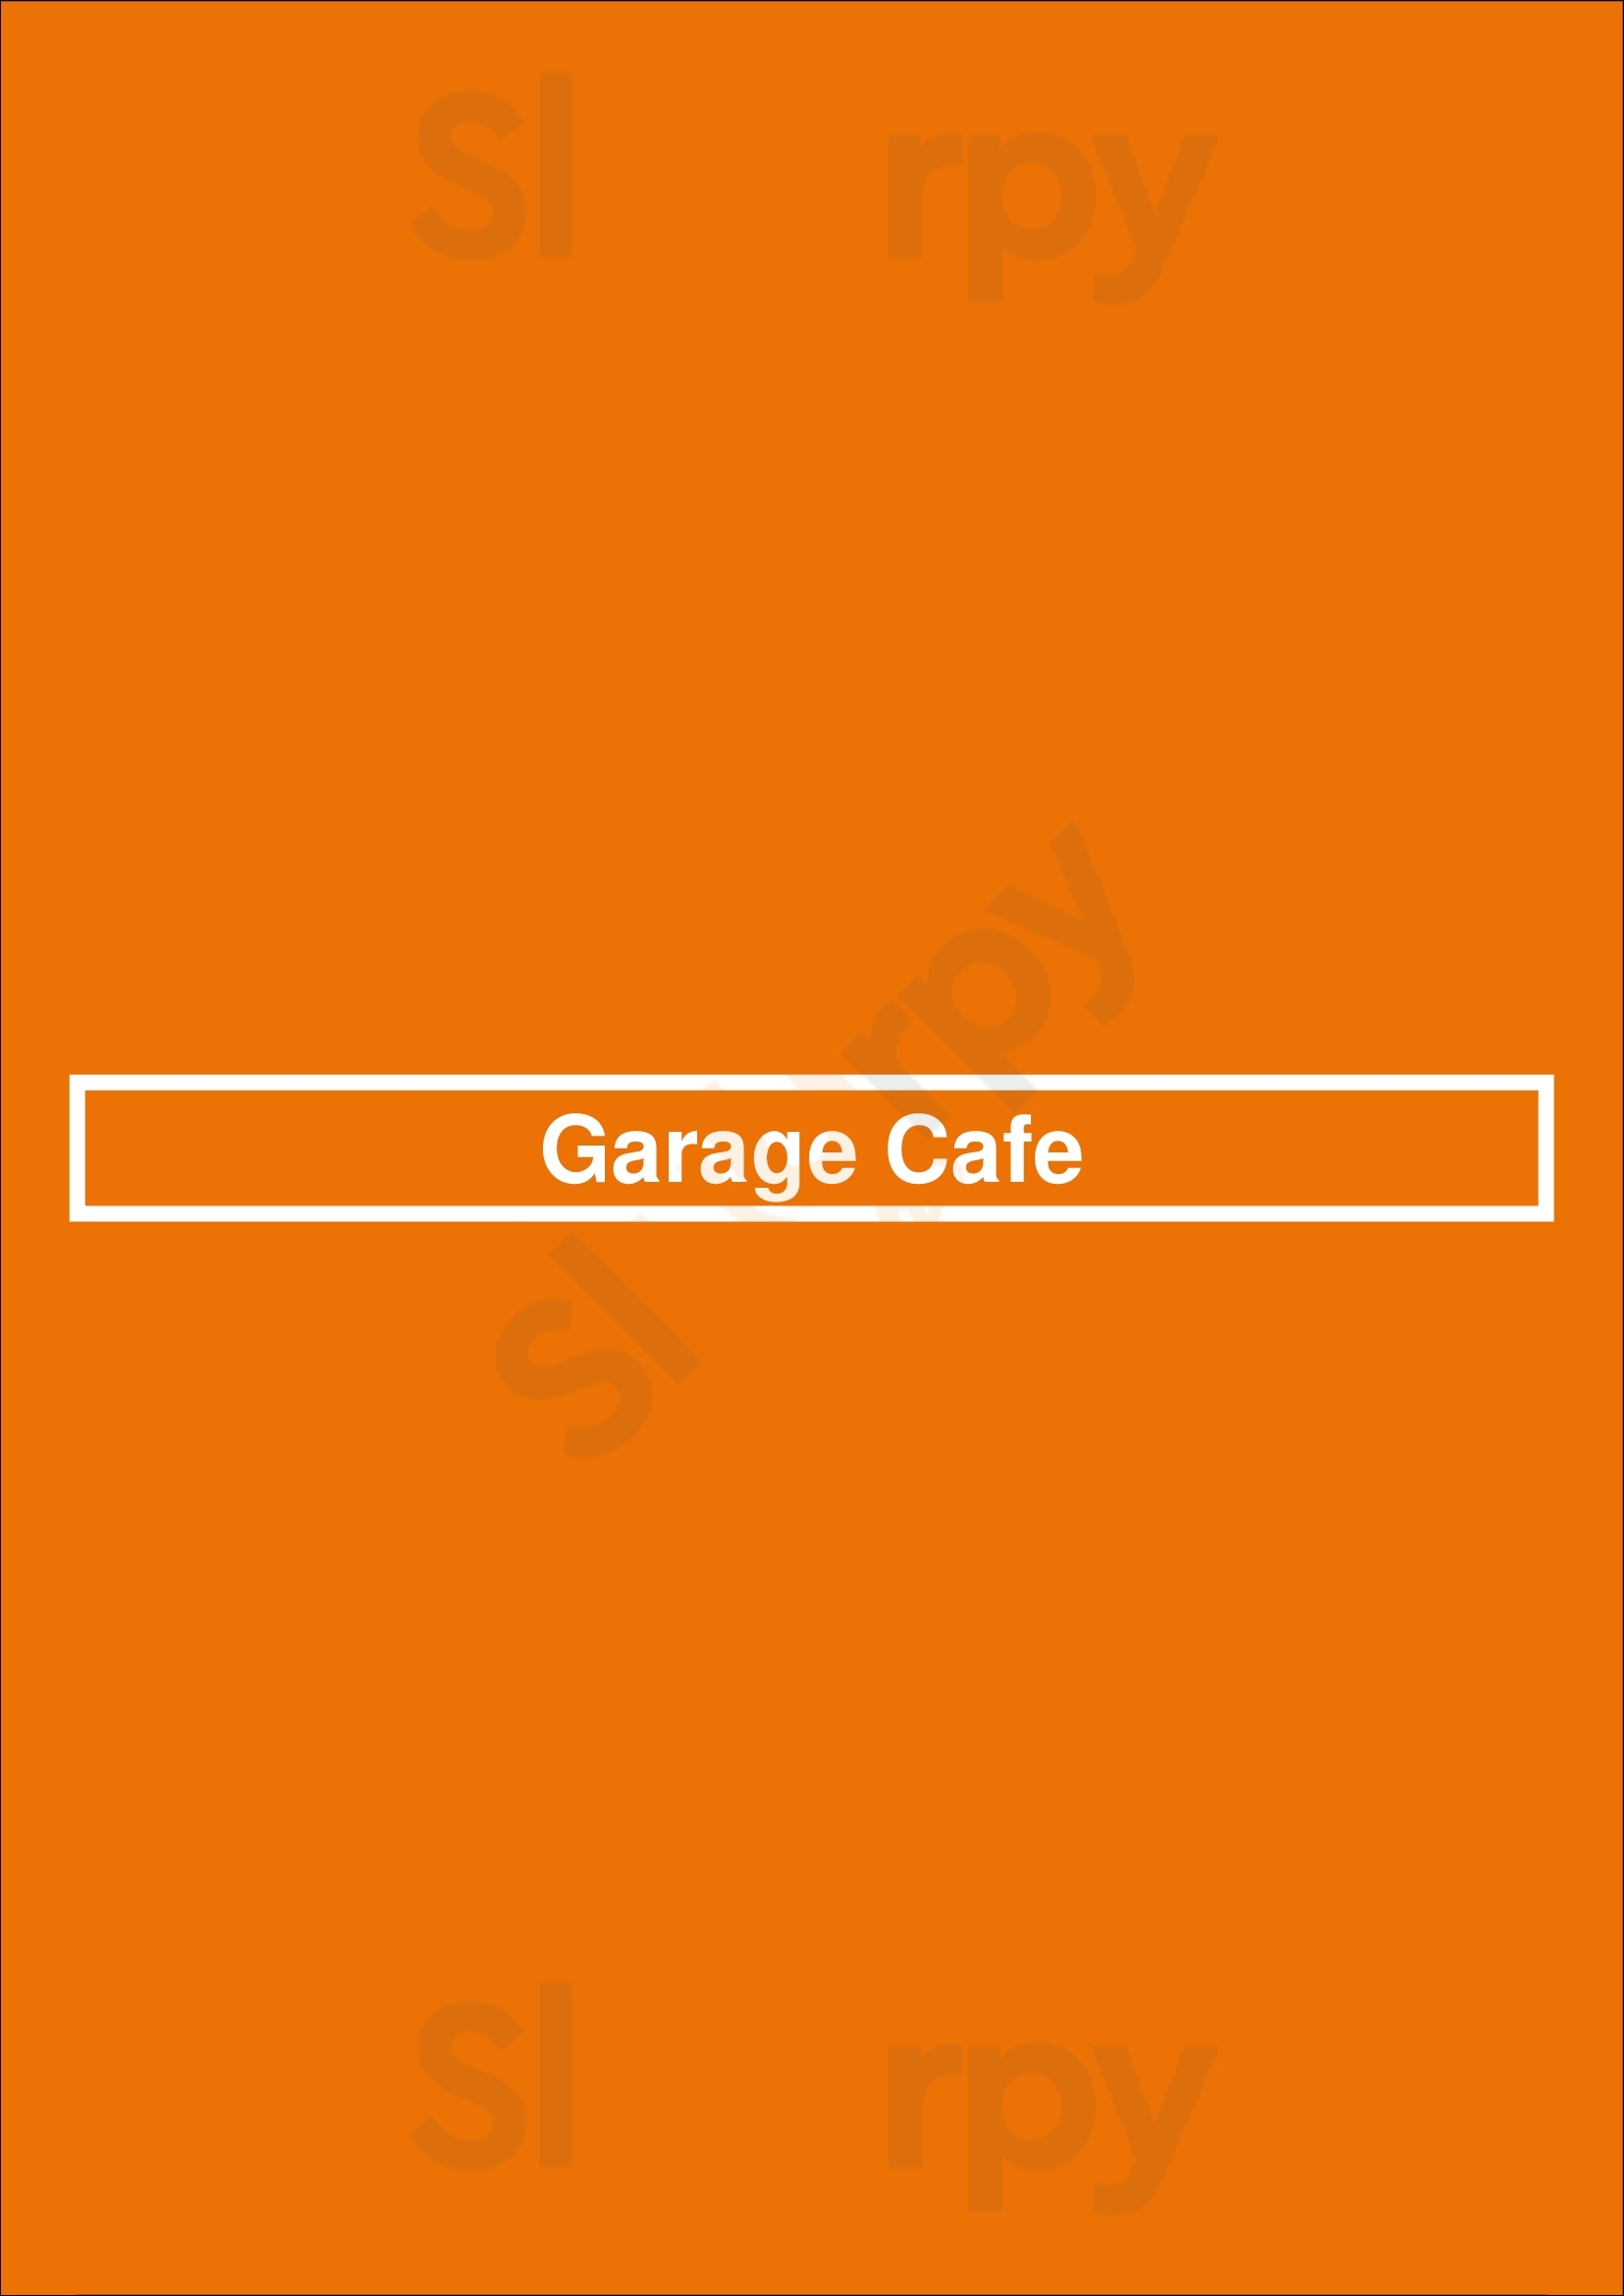 Garage Cafe Winnipeg Menu - 1